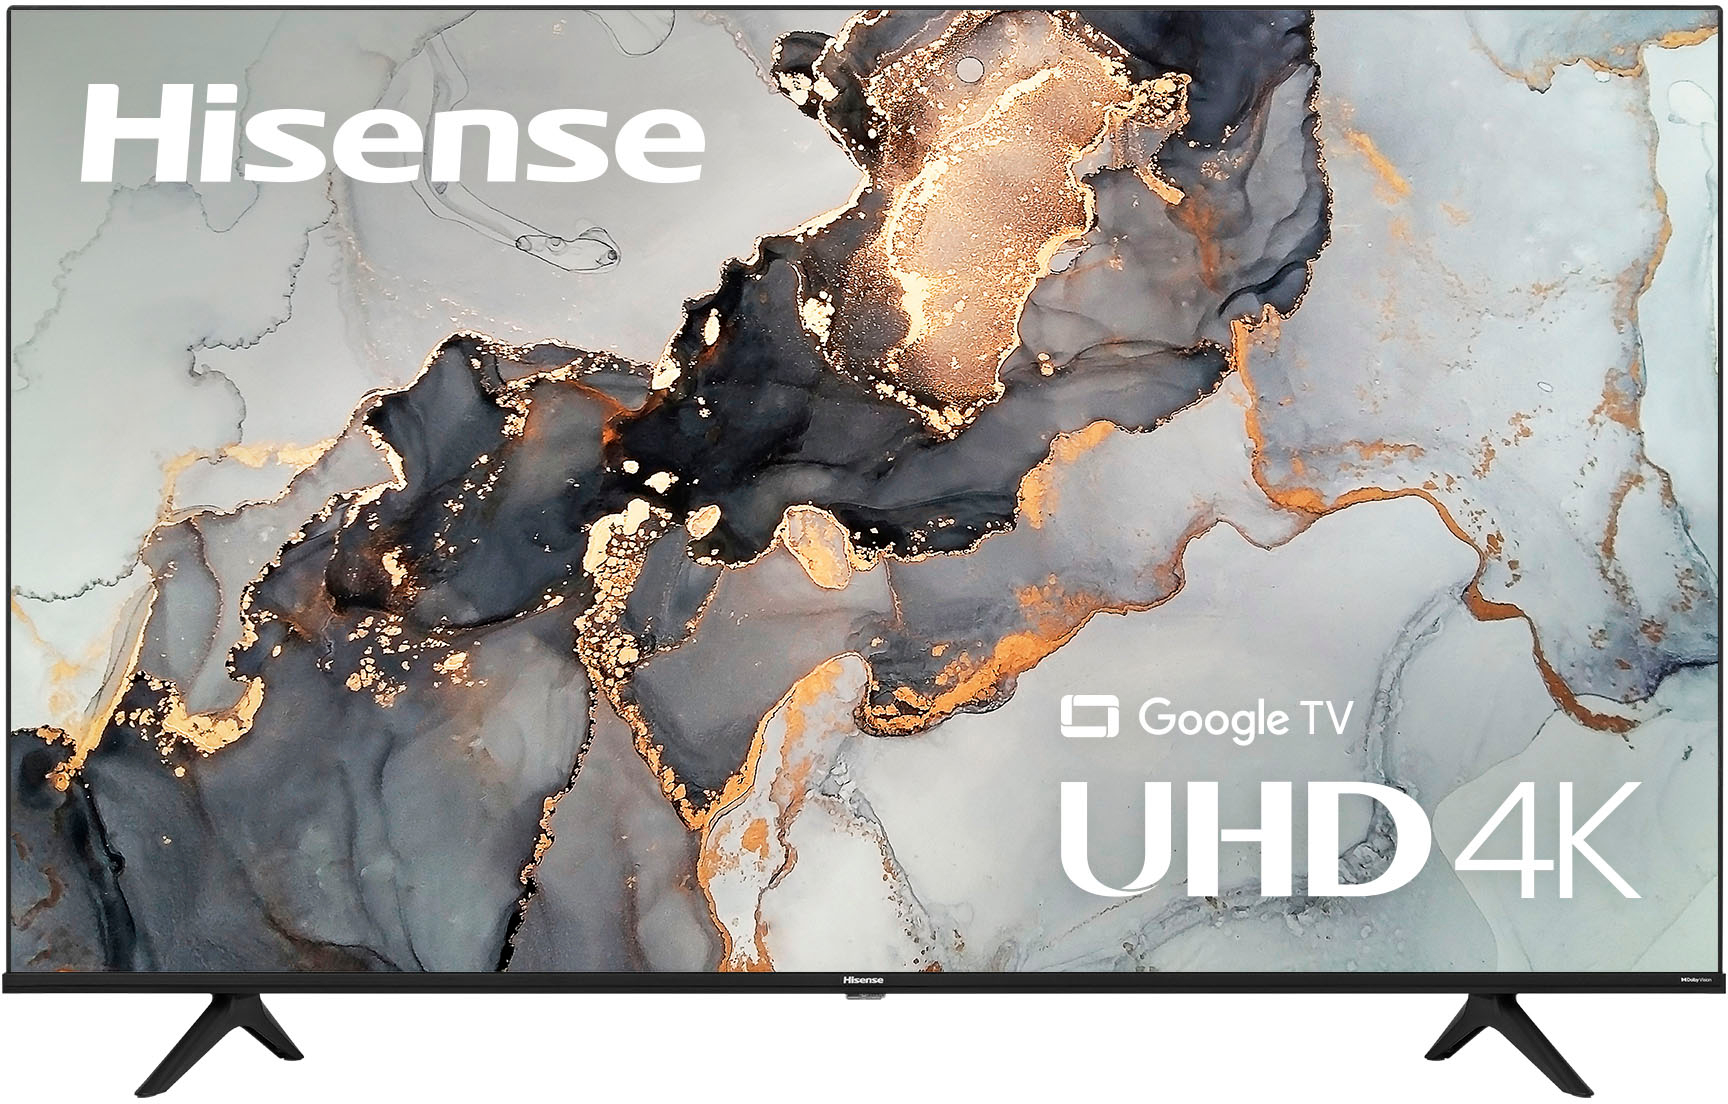 55" Hisense Class A6 Series LED 4K UHD Smart Google TV $300